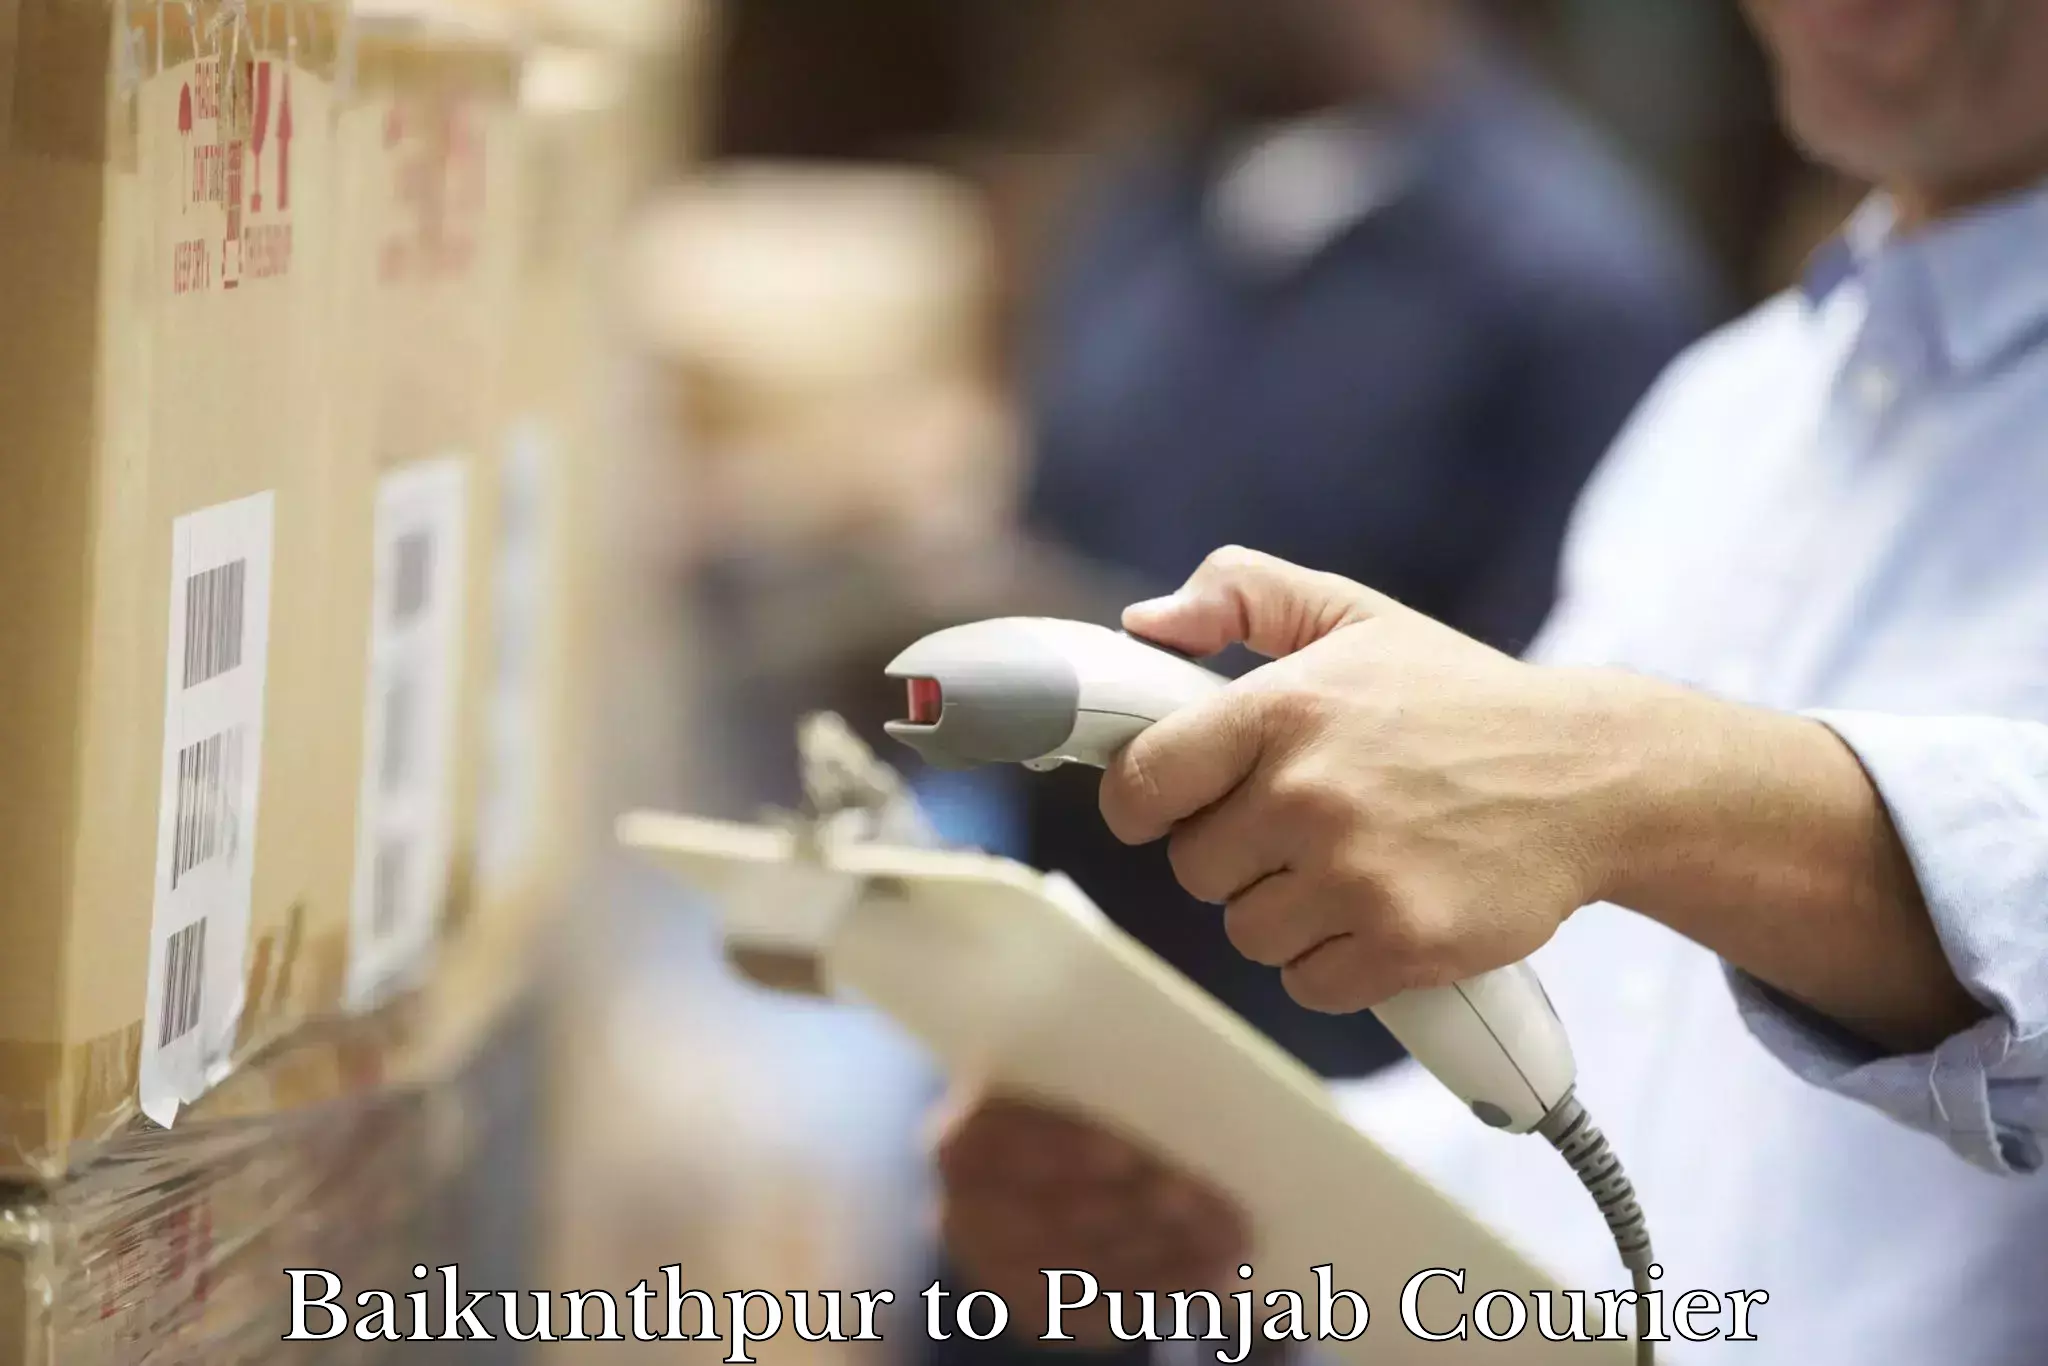 Courier app Baikunthpur to Zirakpur